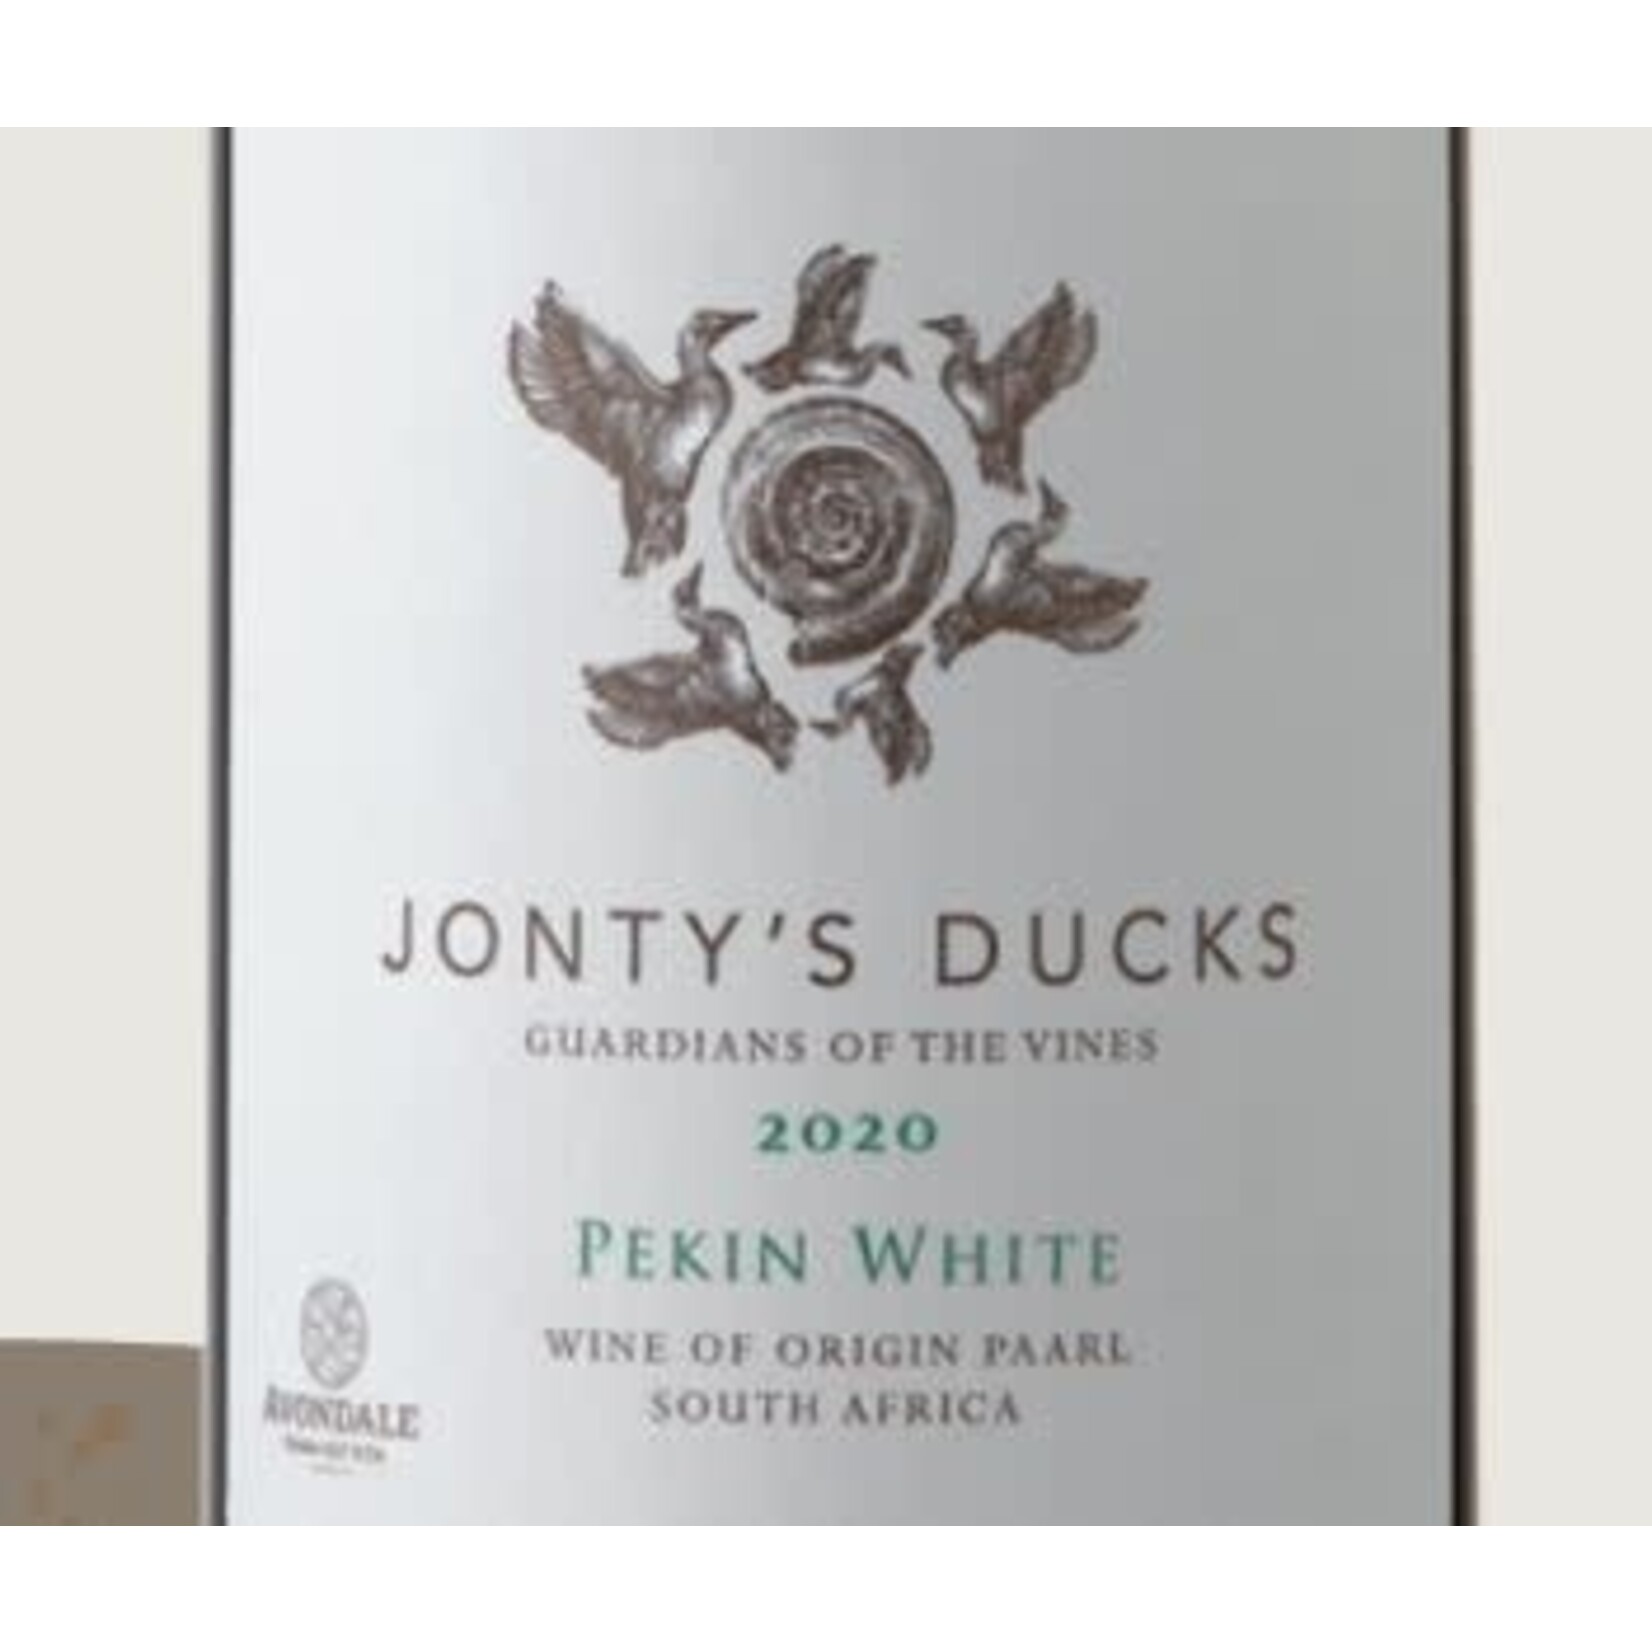 Avondale Jonty's Ducks Guardians of the Vine Pekin White Chenin Blanc 2020 South Africa